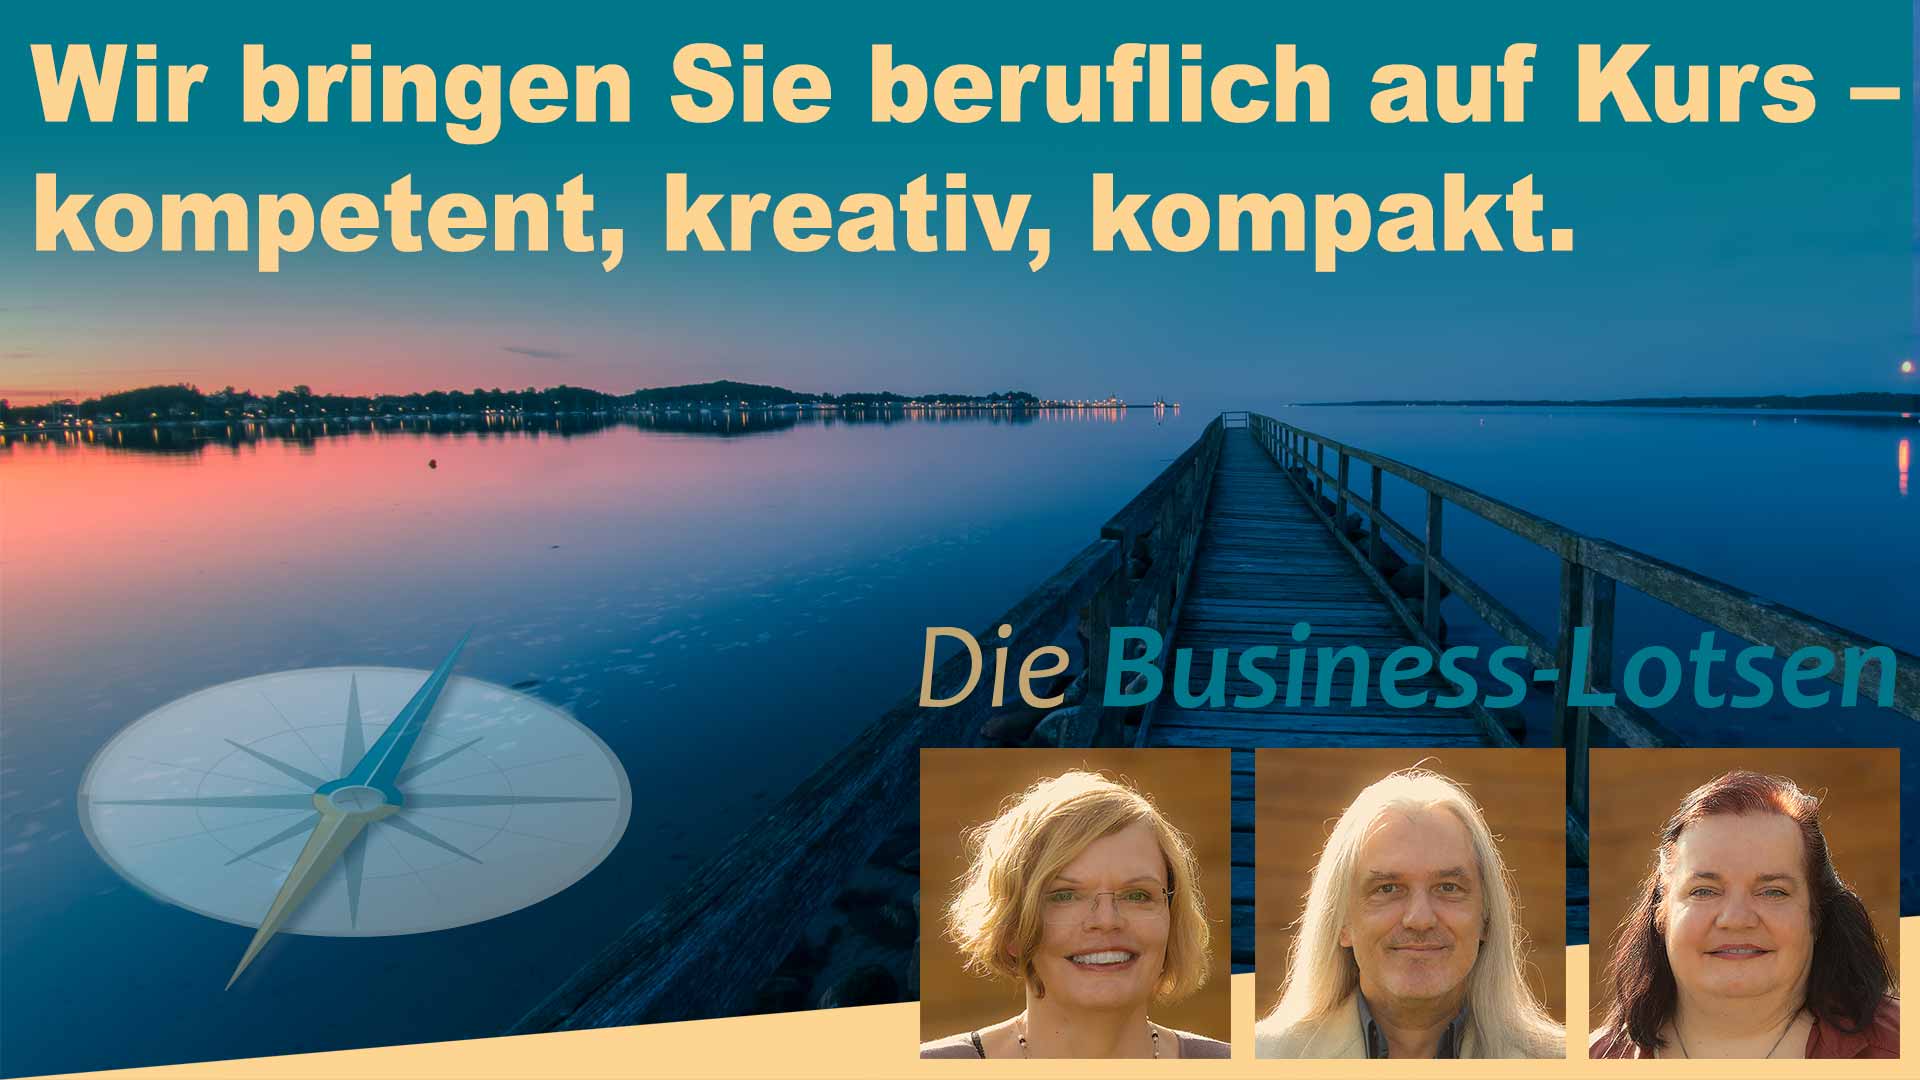 (c) Business-lotsen.de